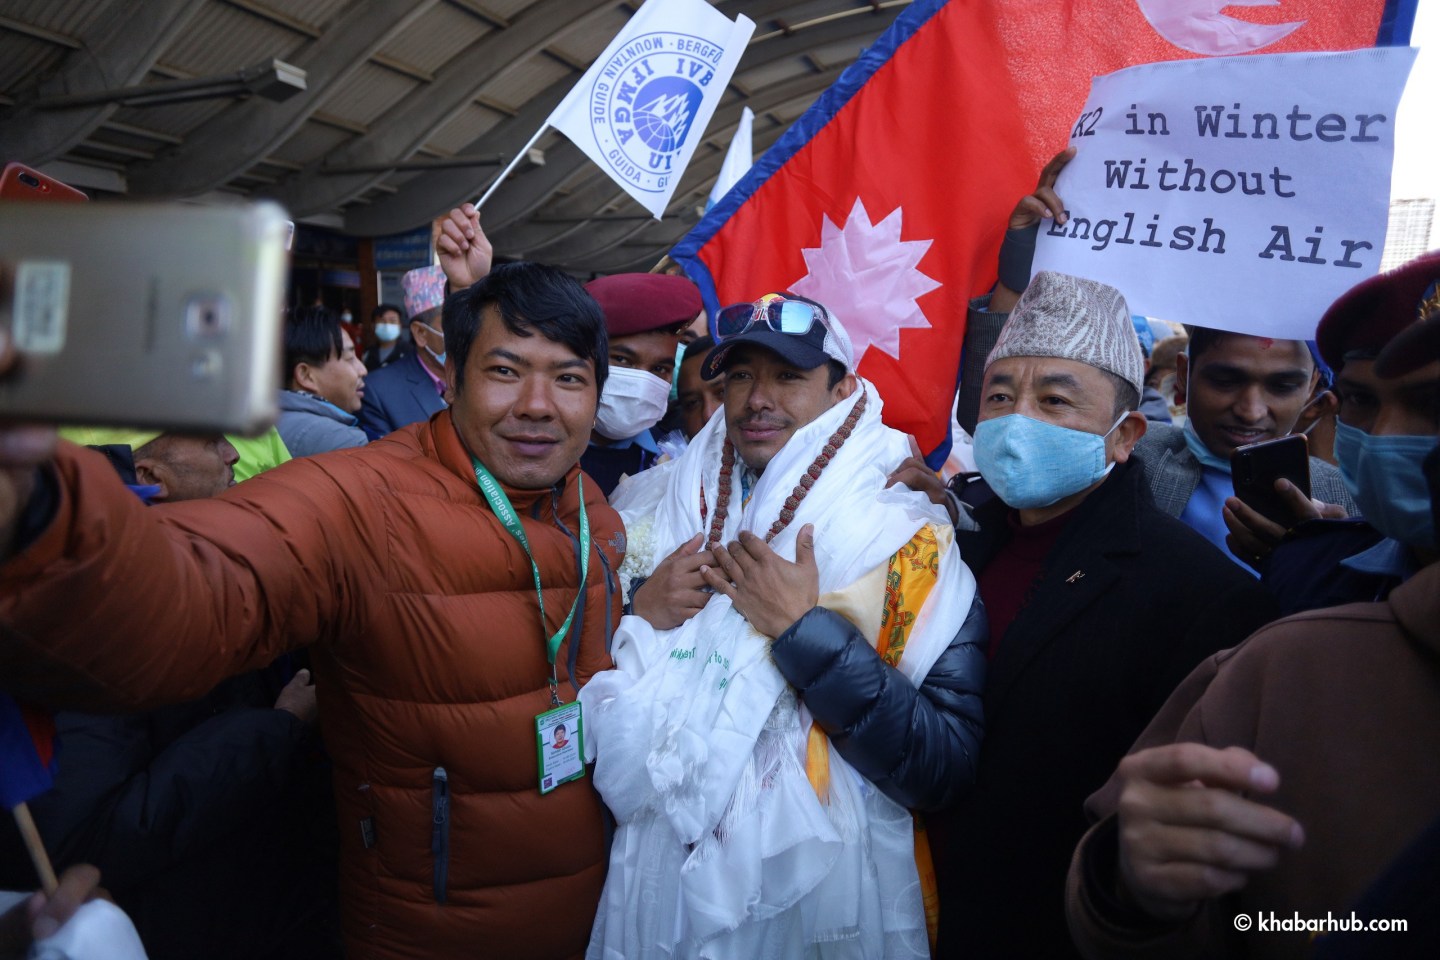 K2 winter summiteers receive a hero’s welcome home